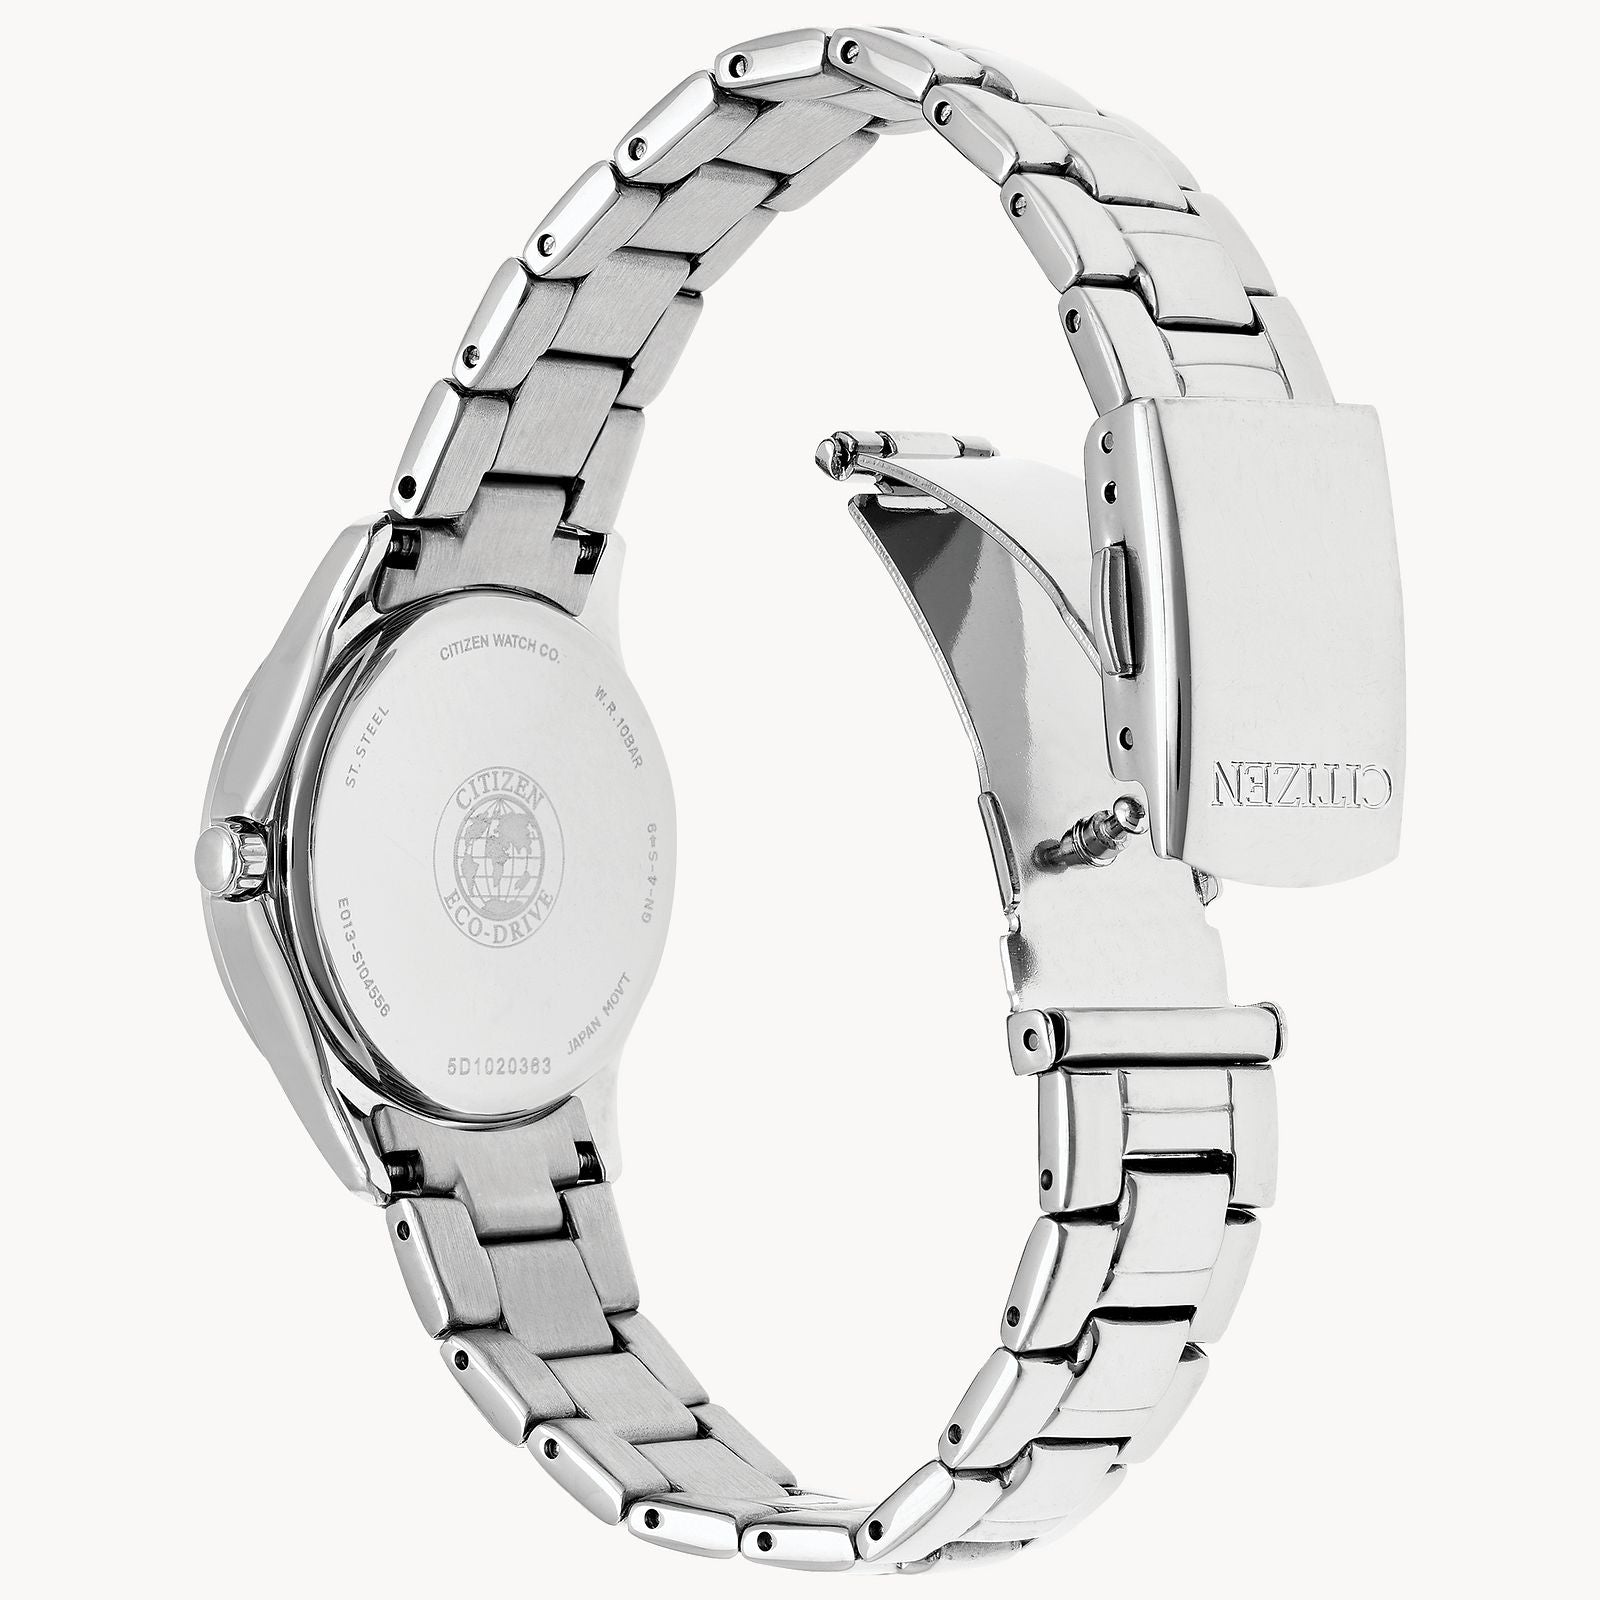 New Citizen eco drive mens watch, Full Stainless Steel Adjustable Bracelet  . | eBay